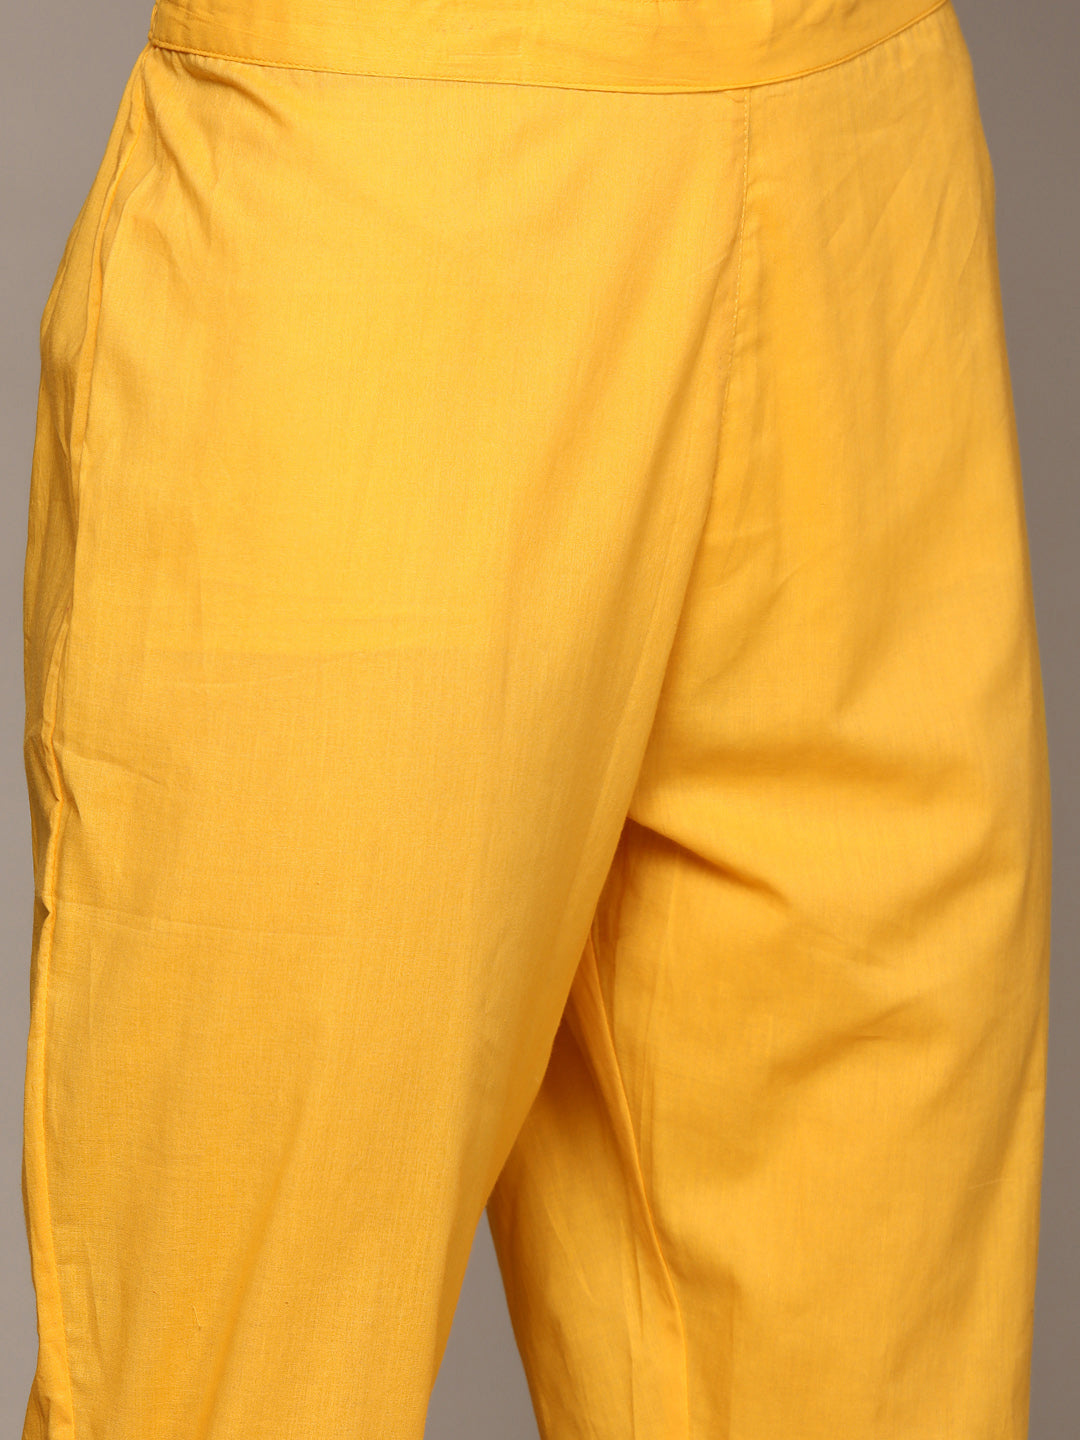 Ishin Women's Yellow Embroidered Anarkali Kurta with Trouser & Dupatta